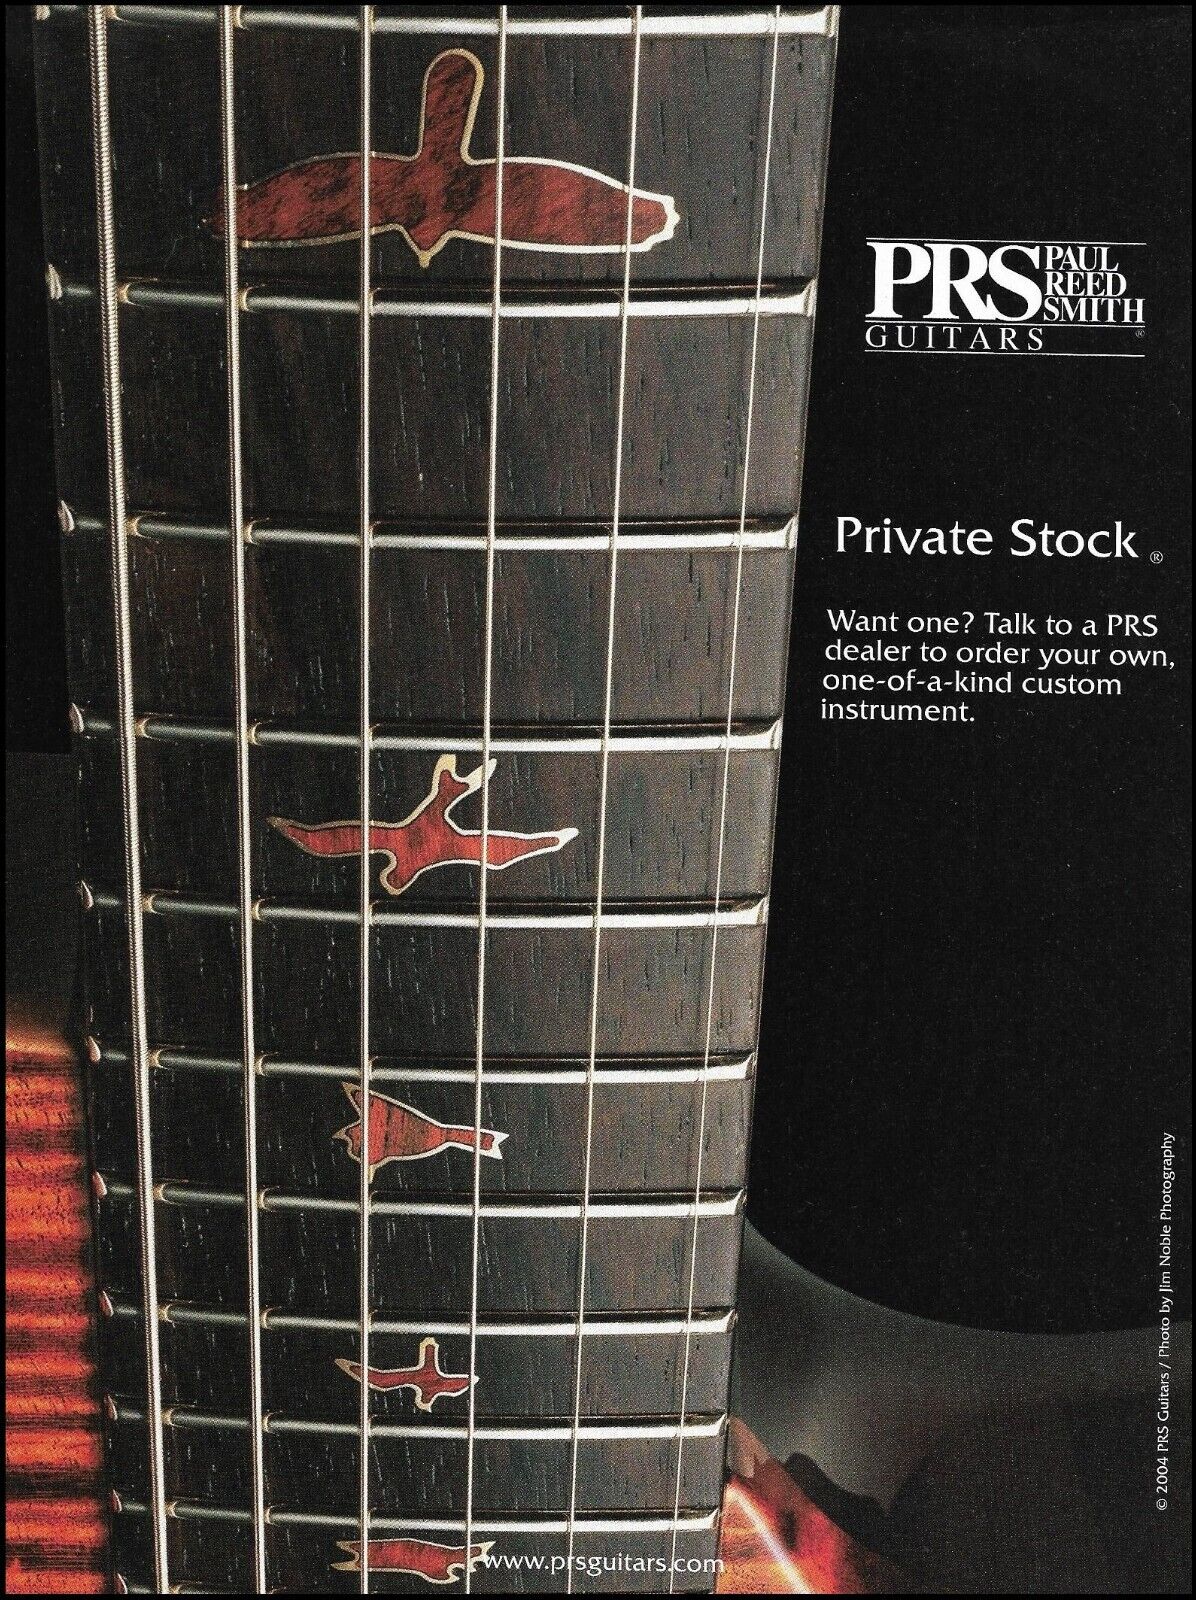 PRS Private Stock Series guitar 2004 advertisement 8 x 11 ad print